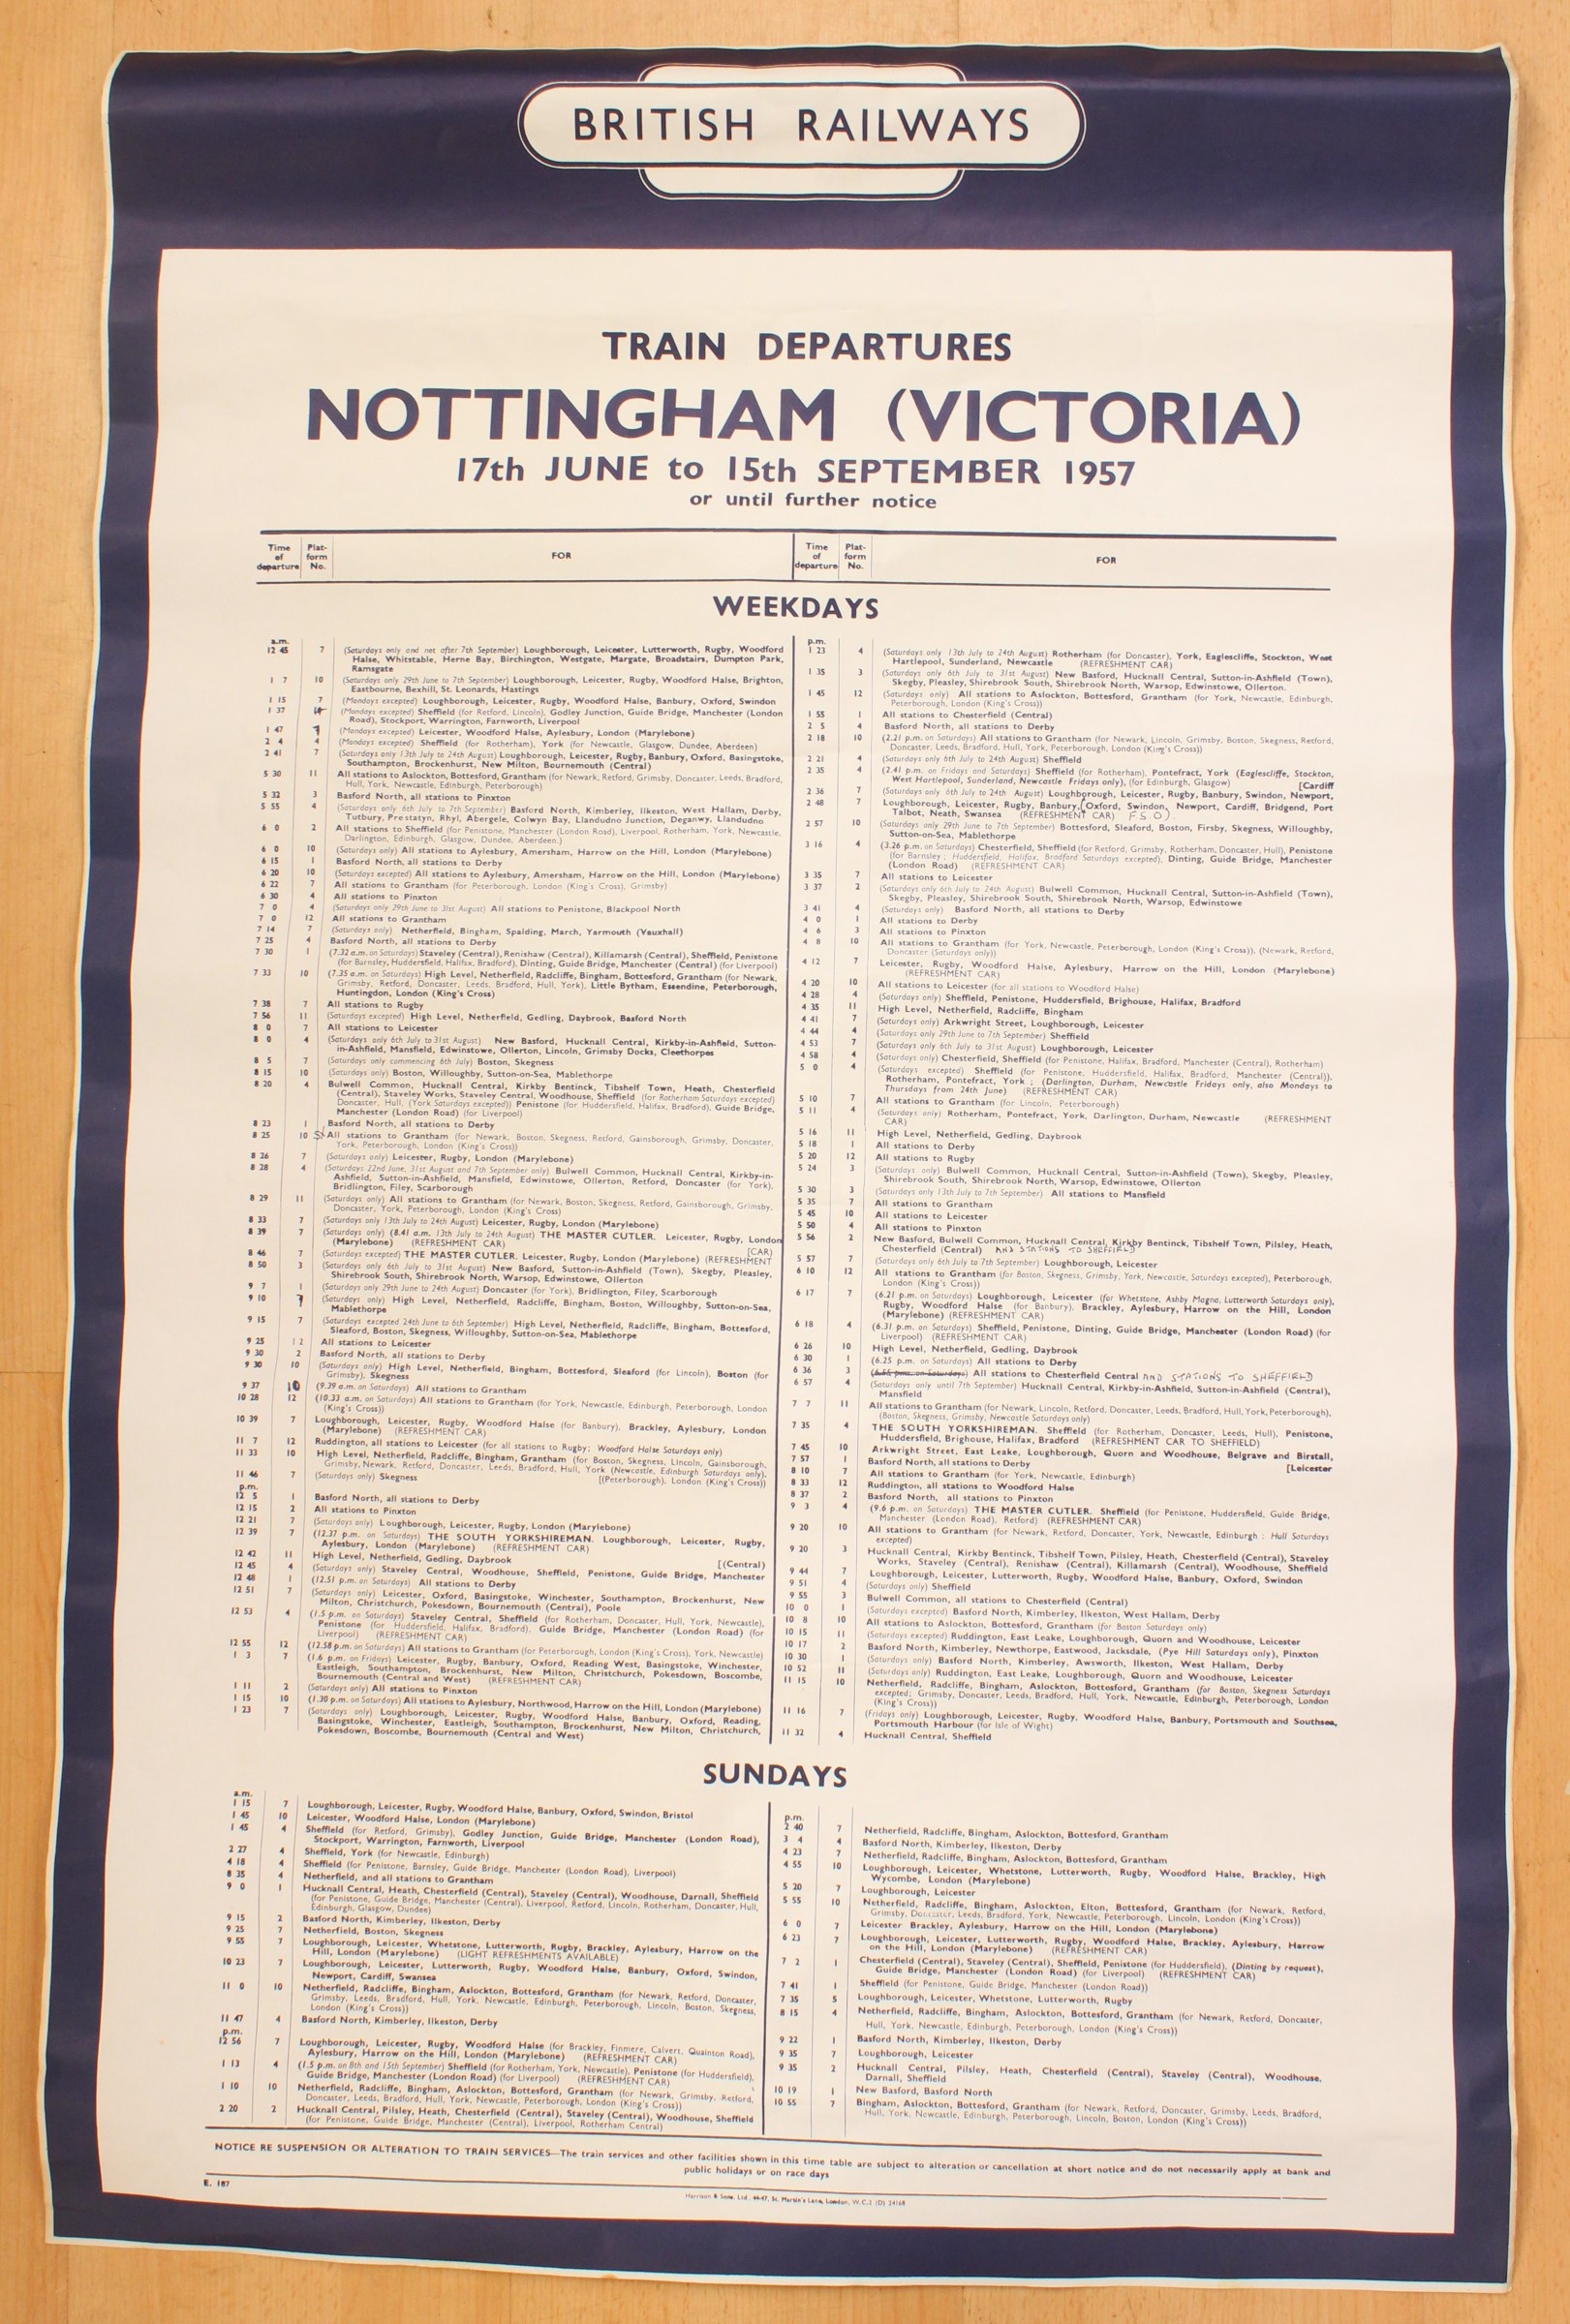 Railwayana: A 'British Railways Train Departures Nottingham (Victoria)' 1957 poster, measuring